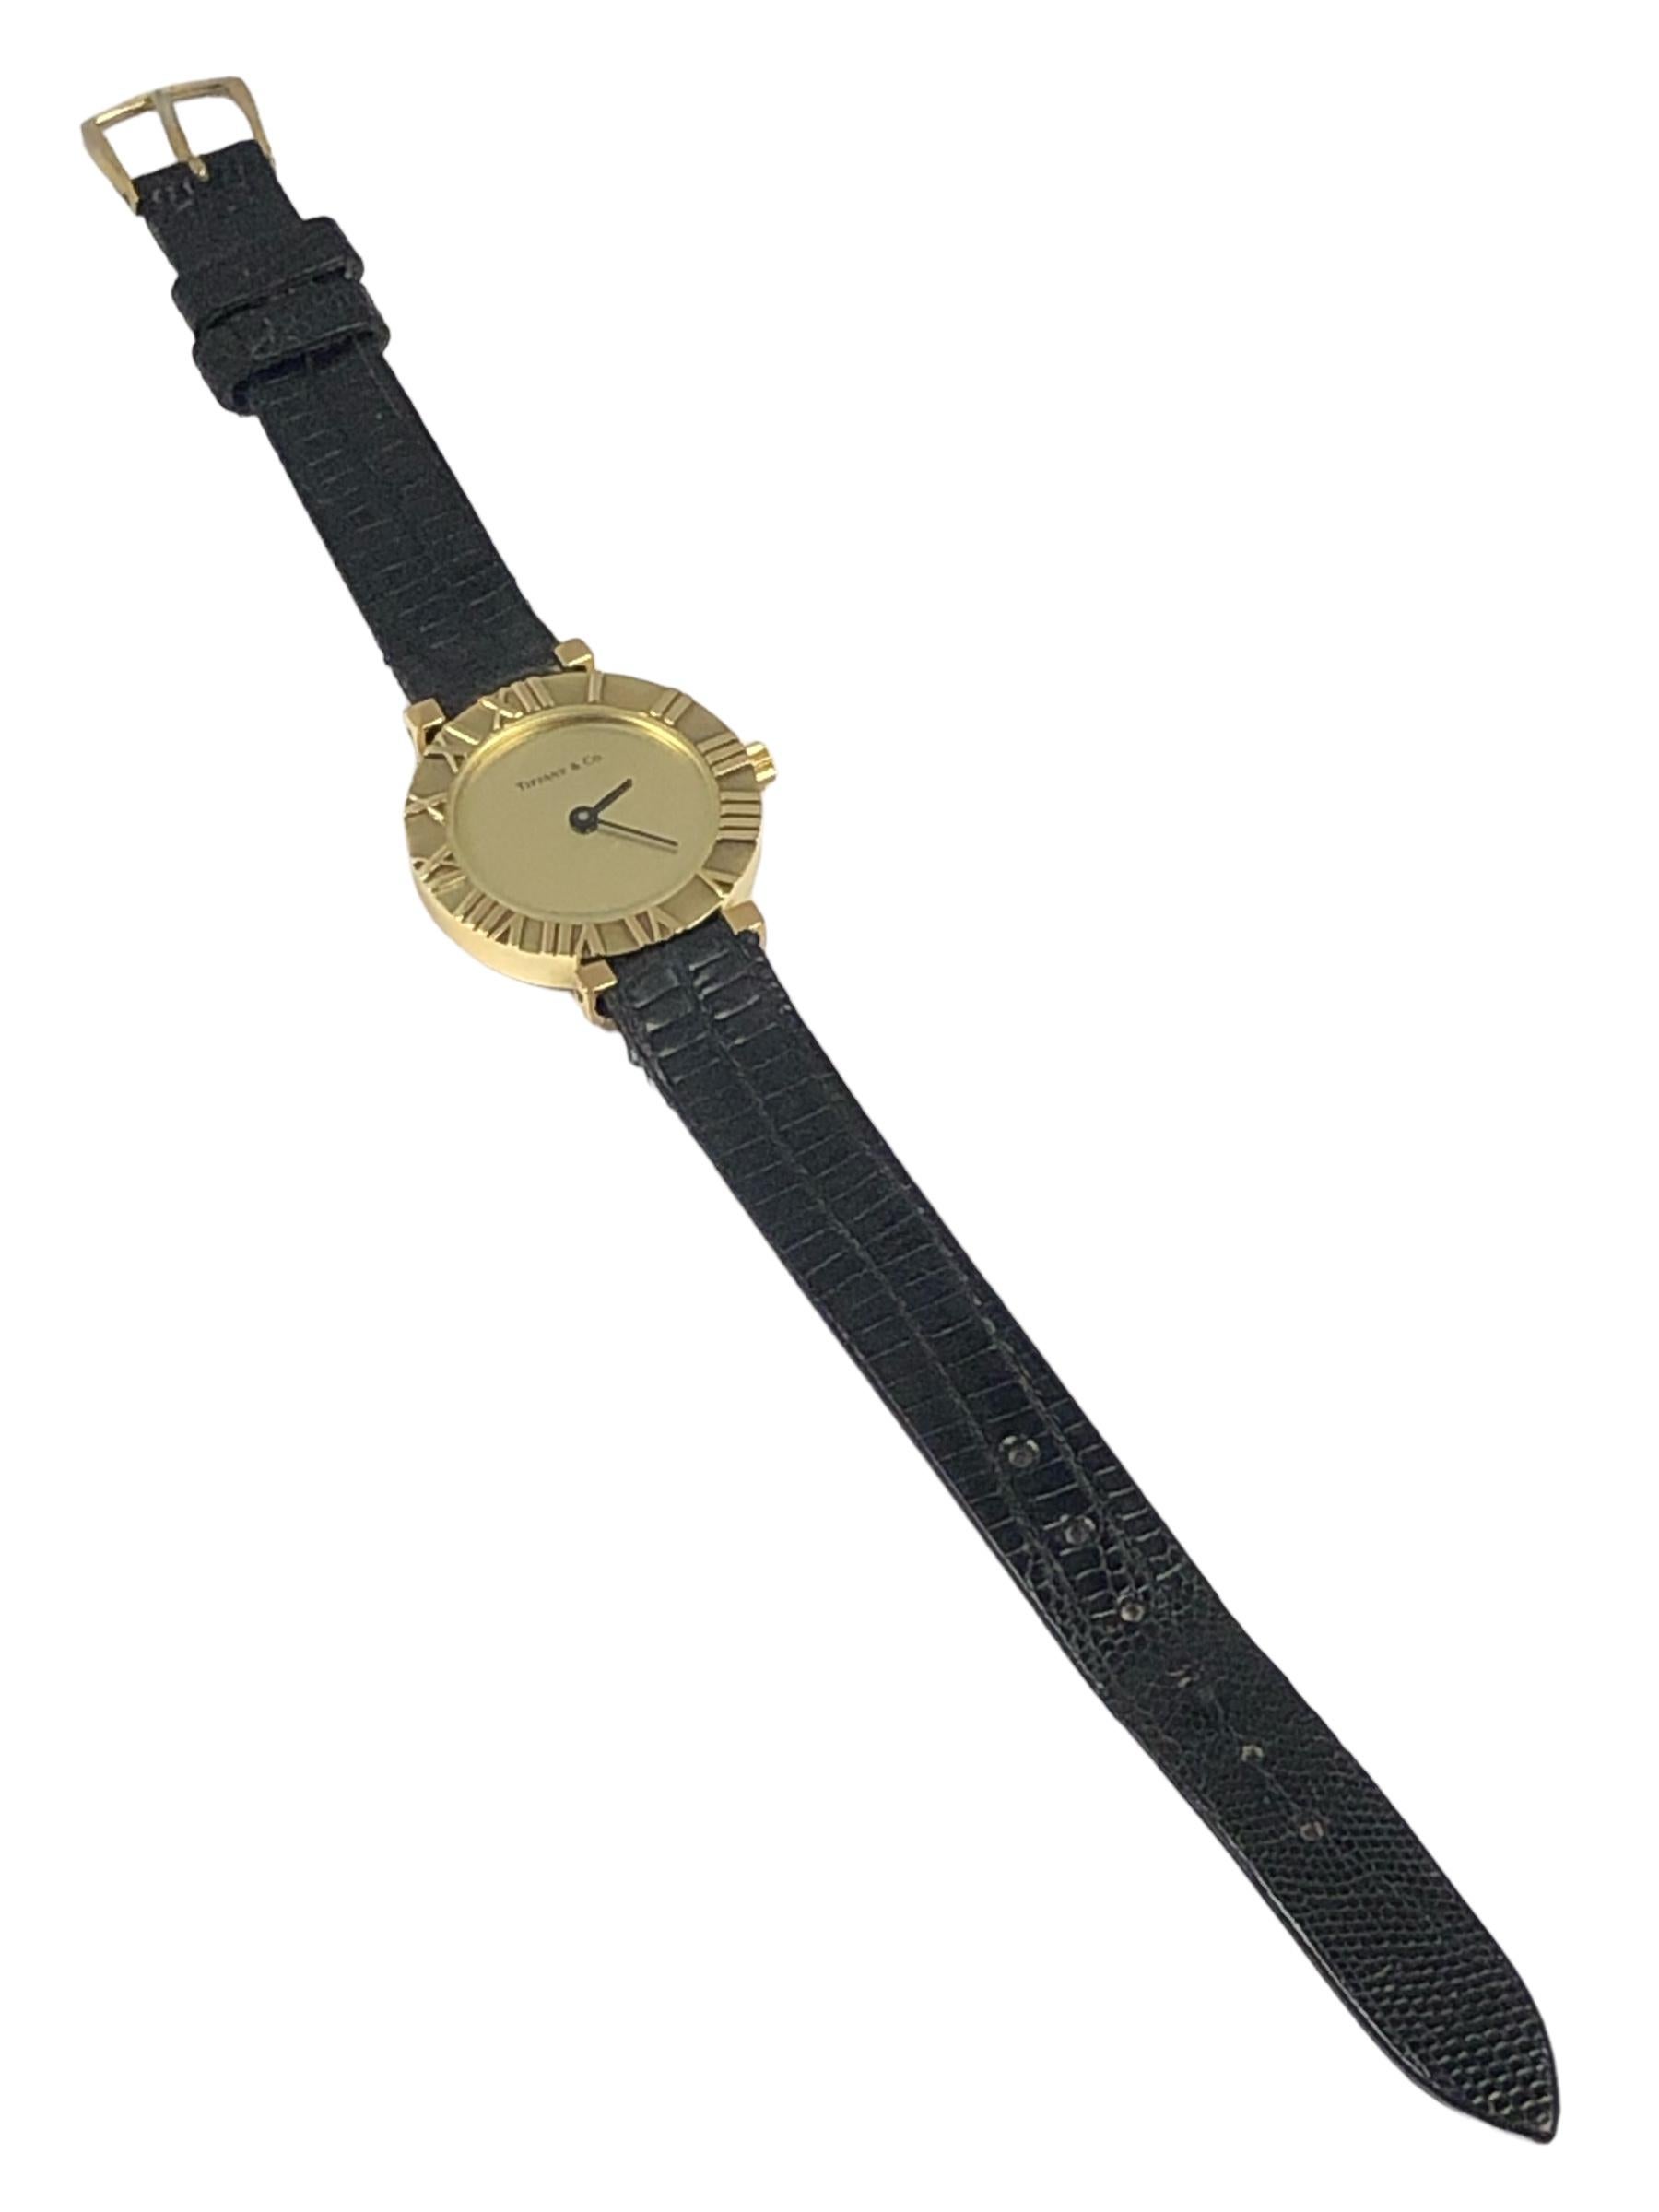 Tiffany & Company Ladies 18k Yellow Gold Atlas Wrist Watch 1